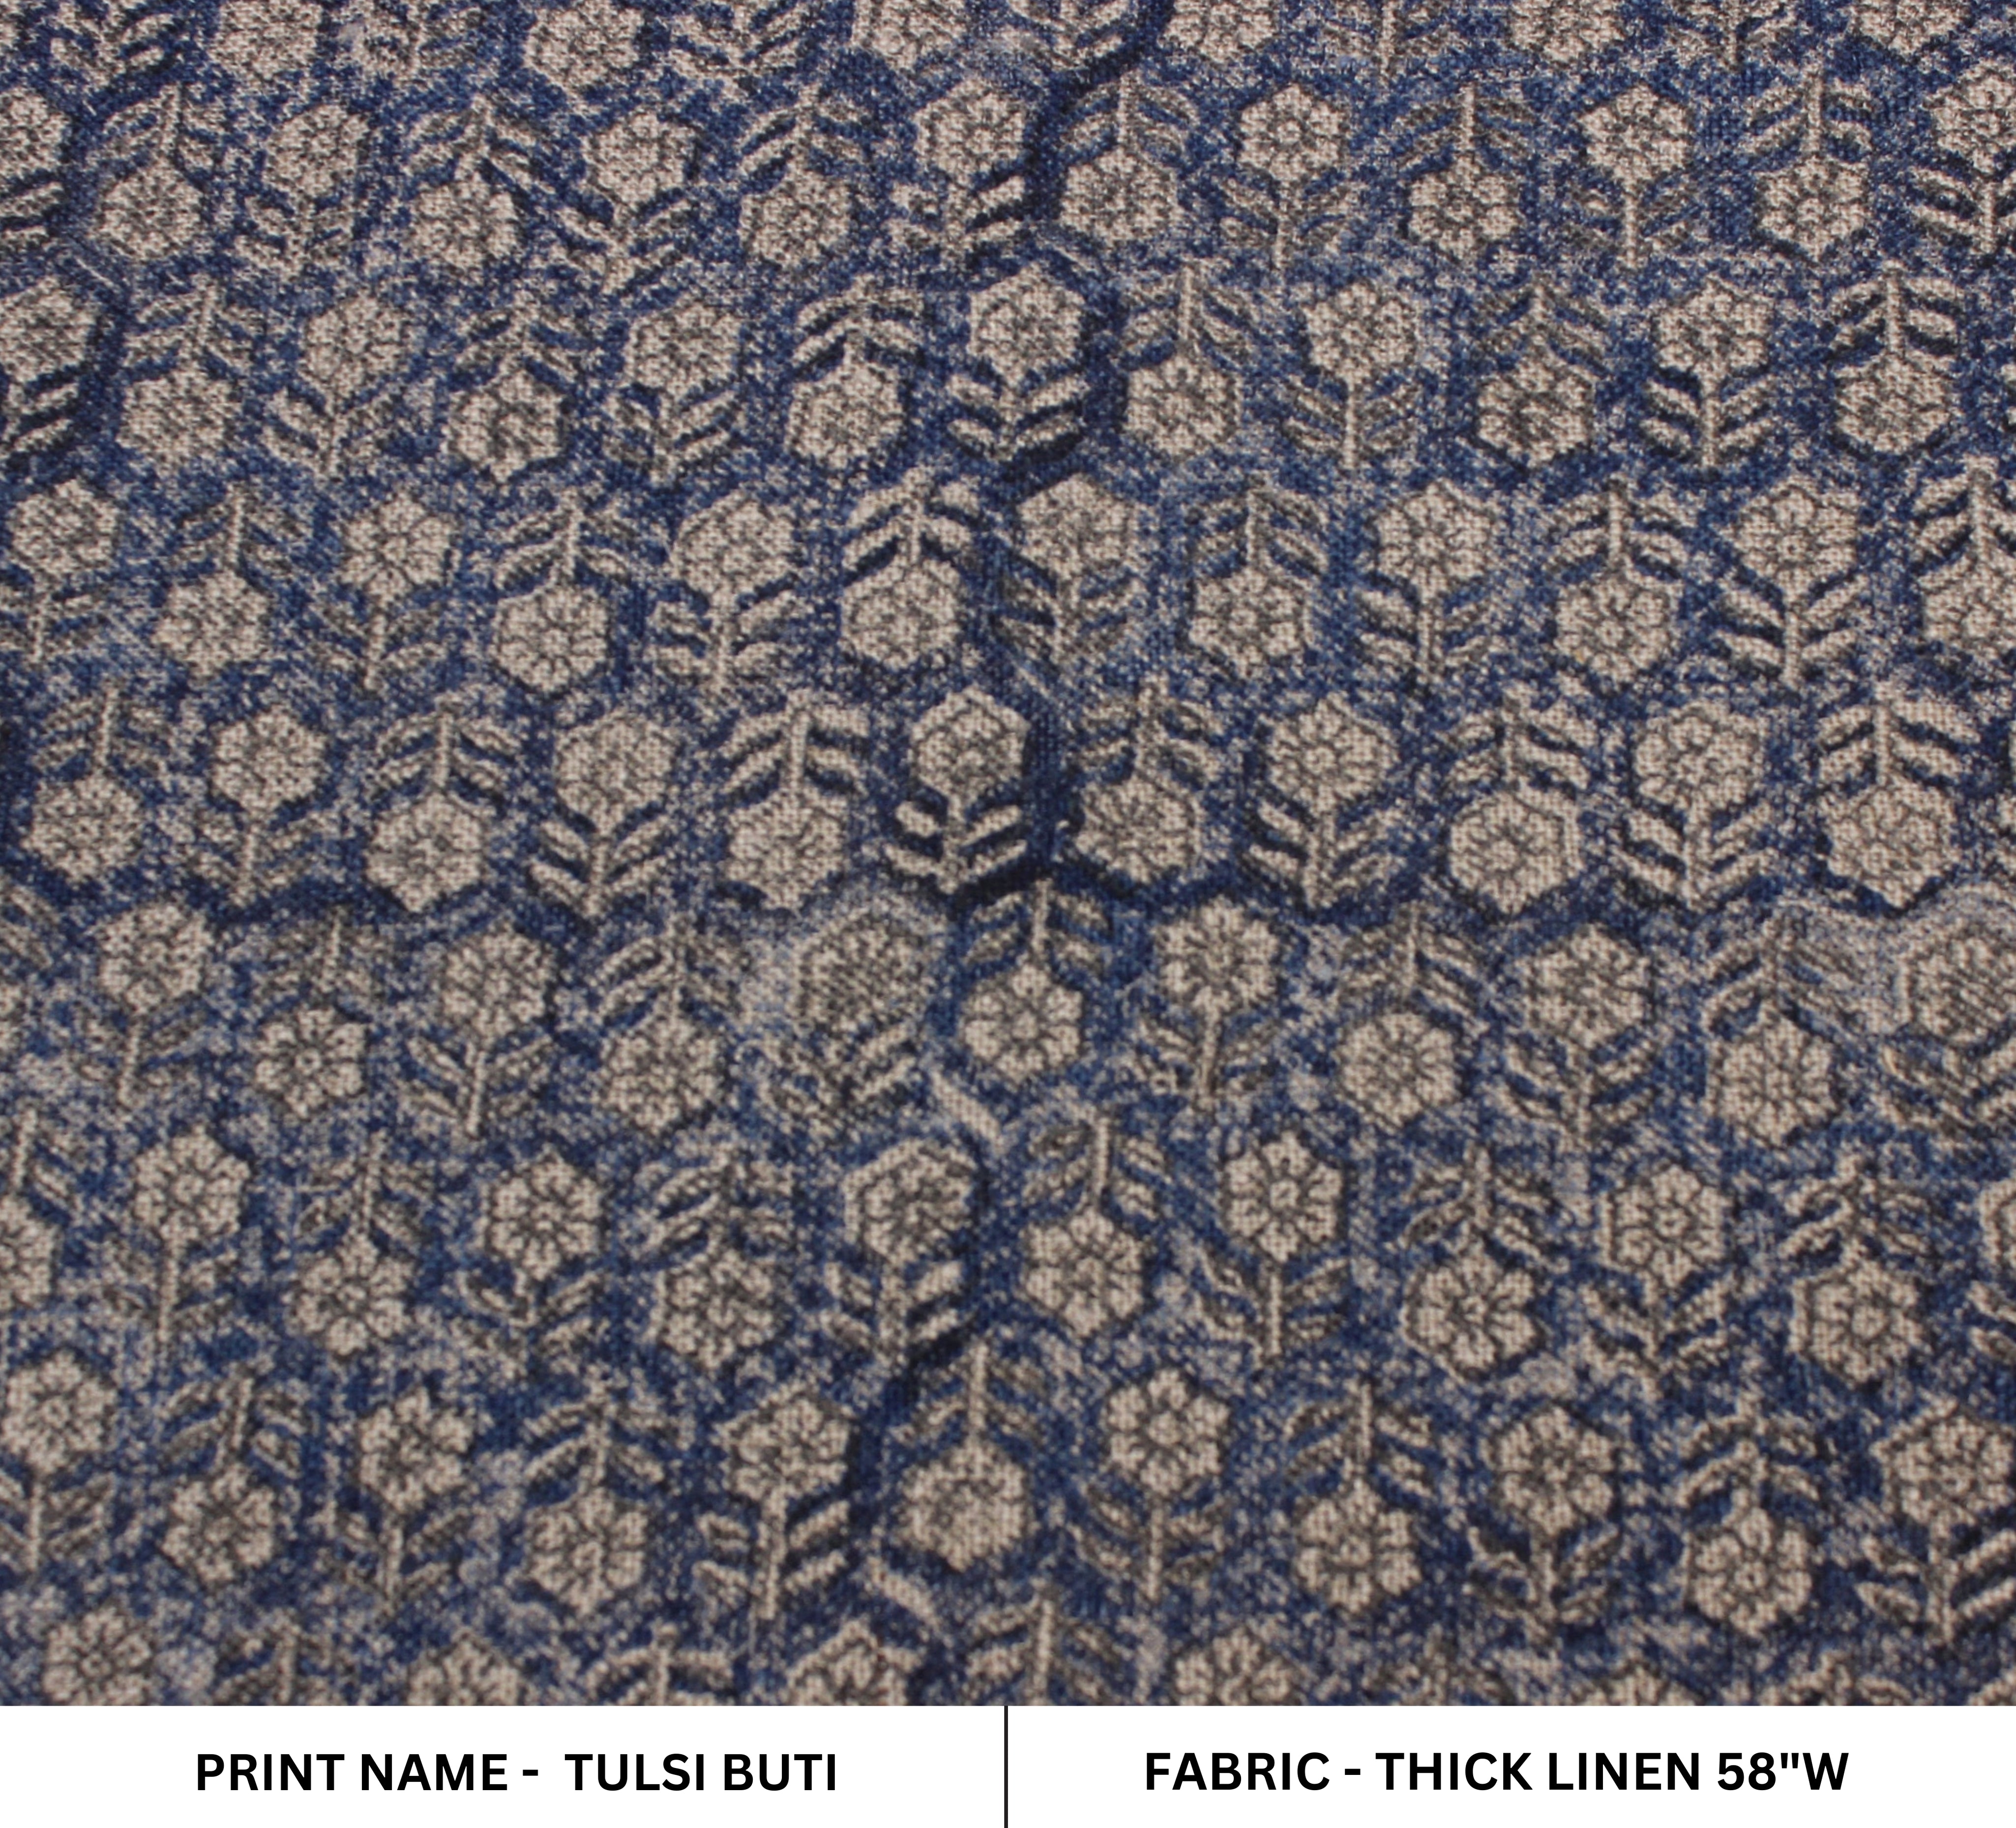 Block Print Linen Fabric, Tulsi Buti Dark Blue  Popular Indian Handmade Art Block Print Linen  Linen By The Yard  Heavy Weight Decorative Fabric